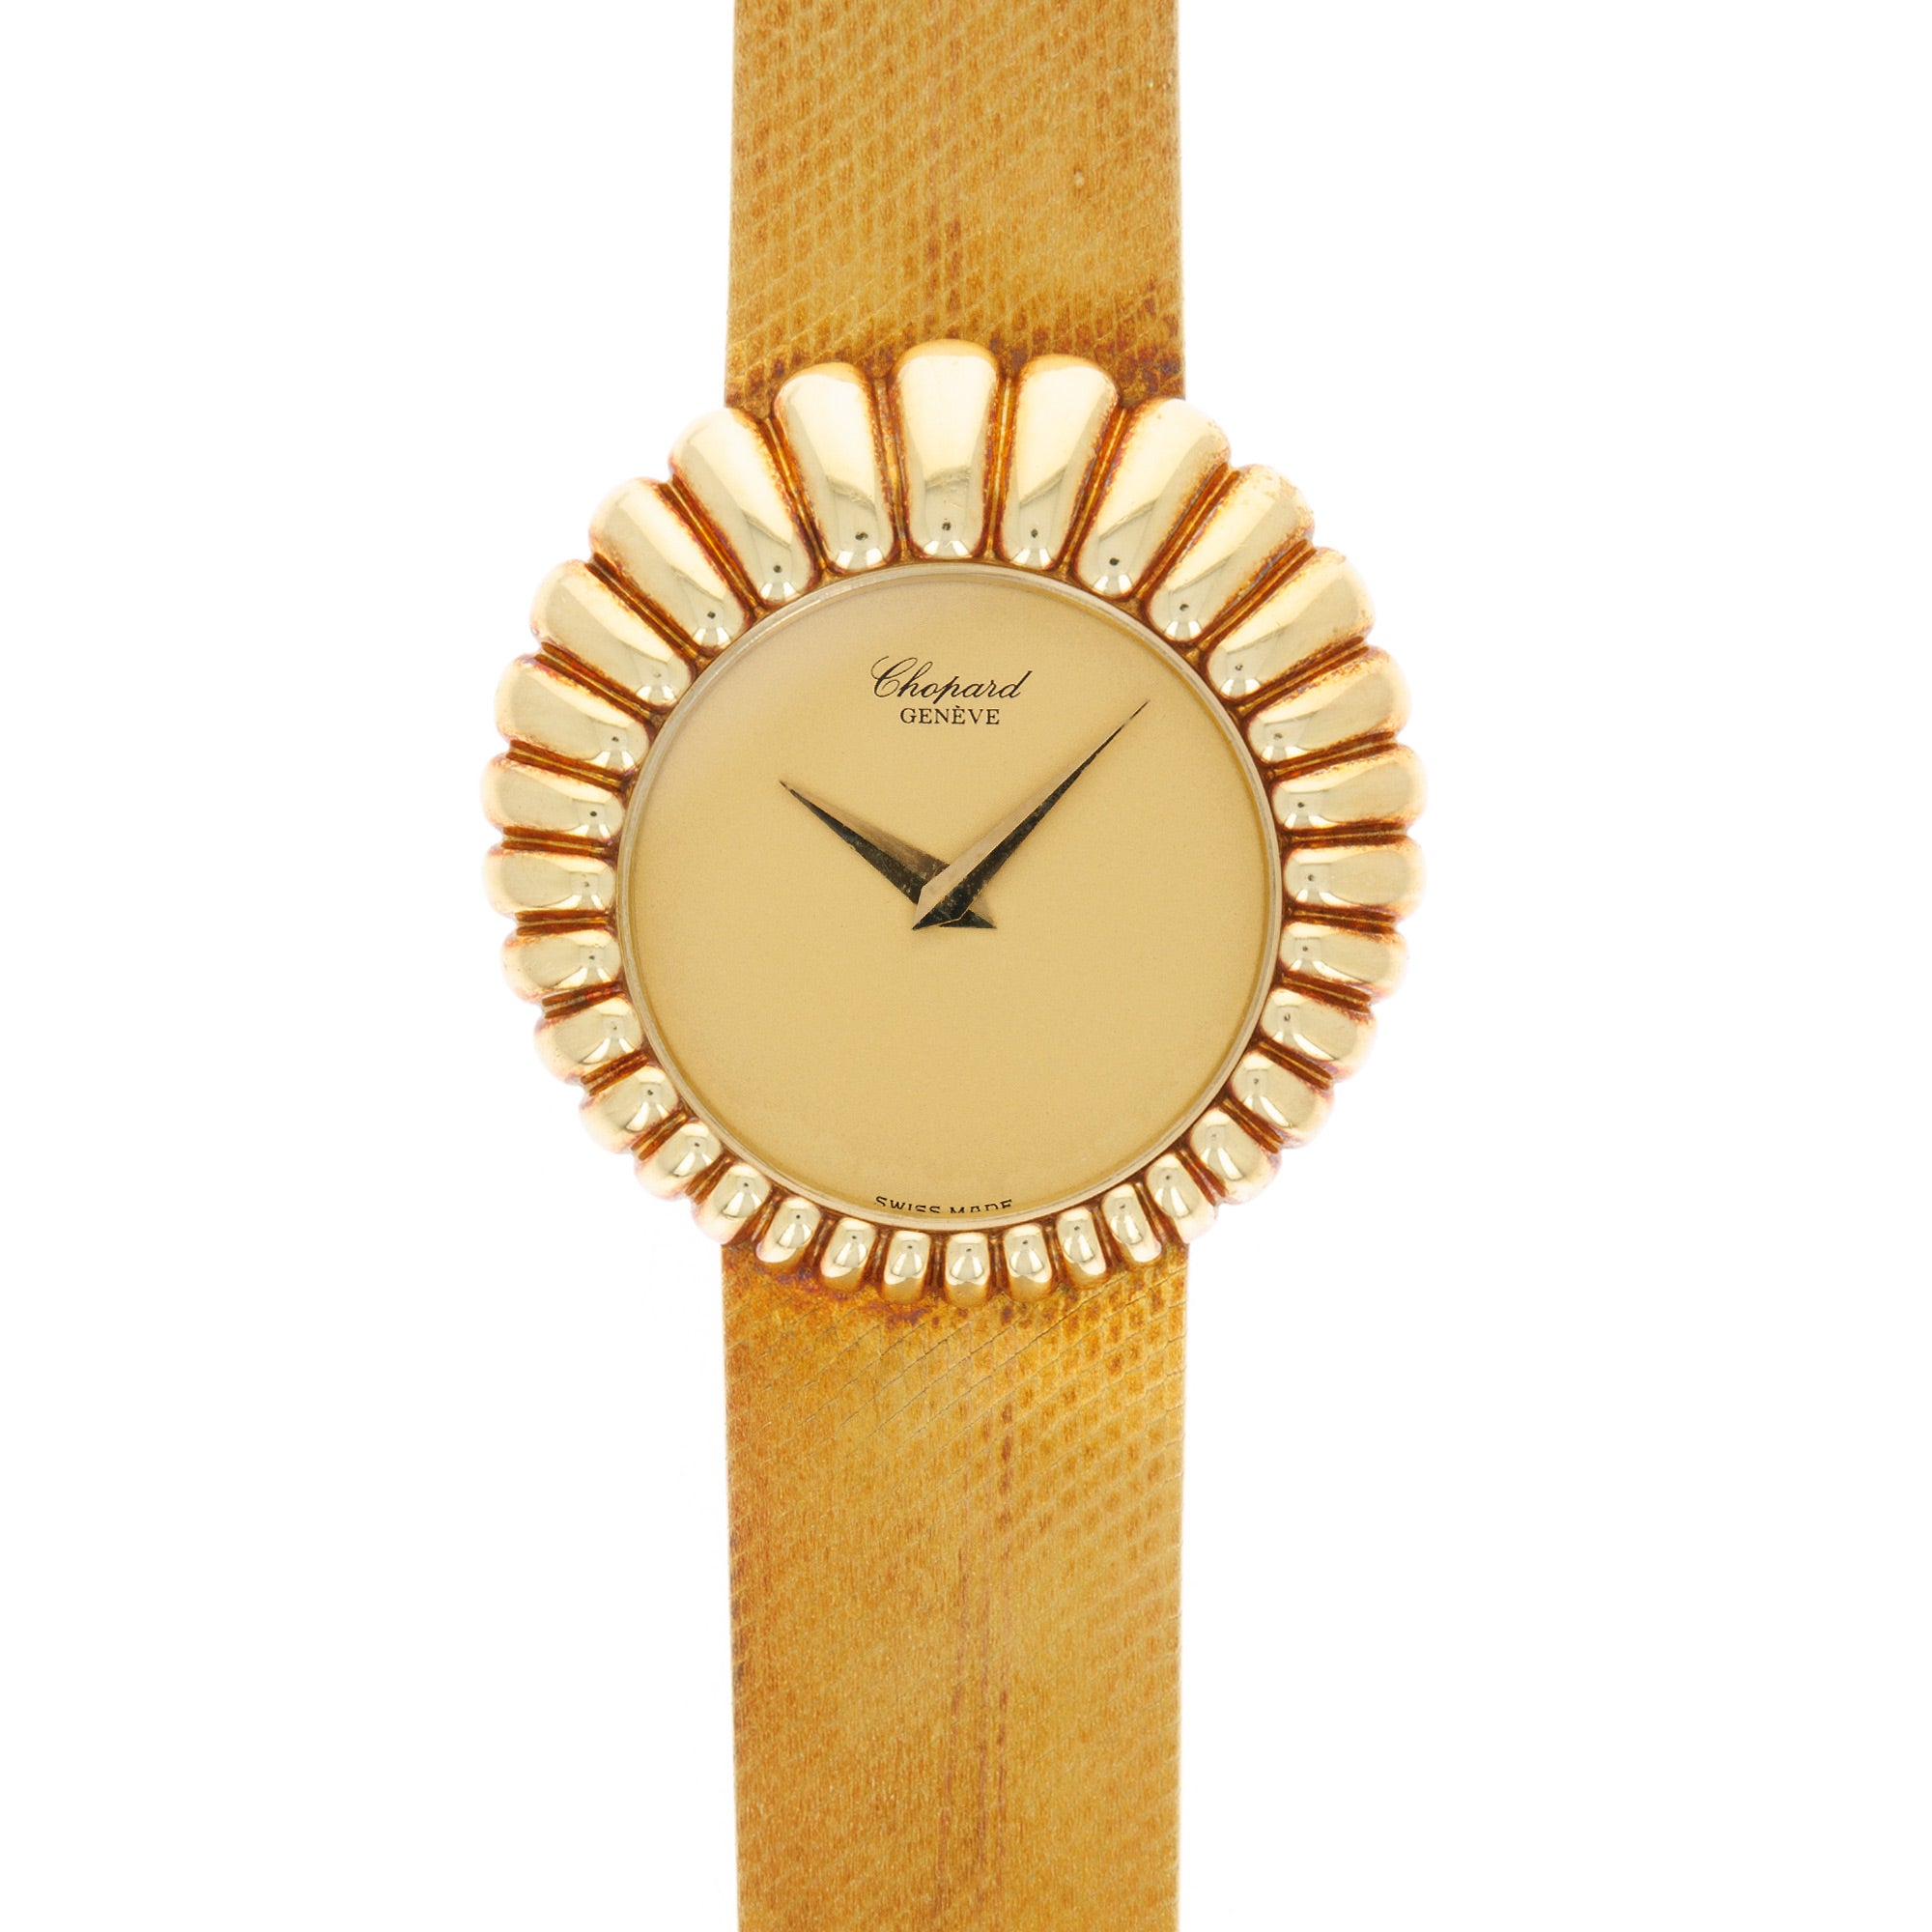 Chopard - Chopard Yellow Gold Bracelet Scallop Watch Ref. 4029 - The Keystone Watches